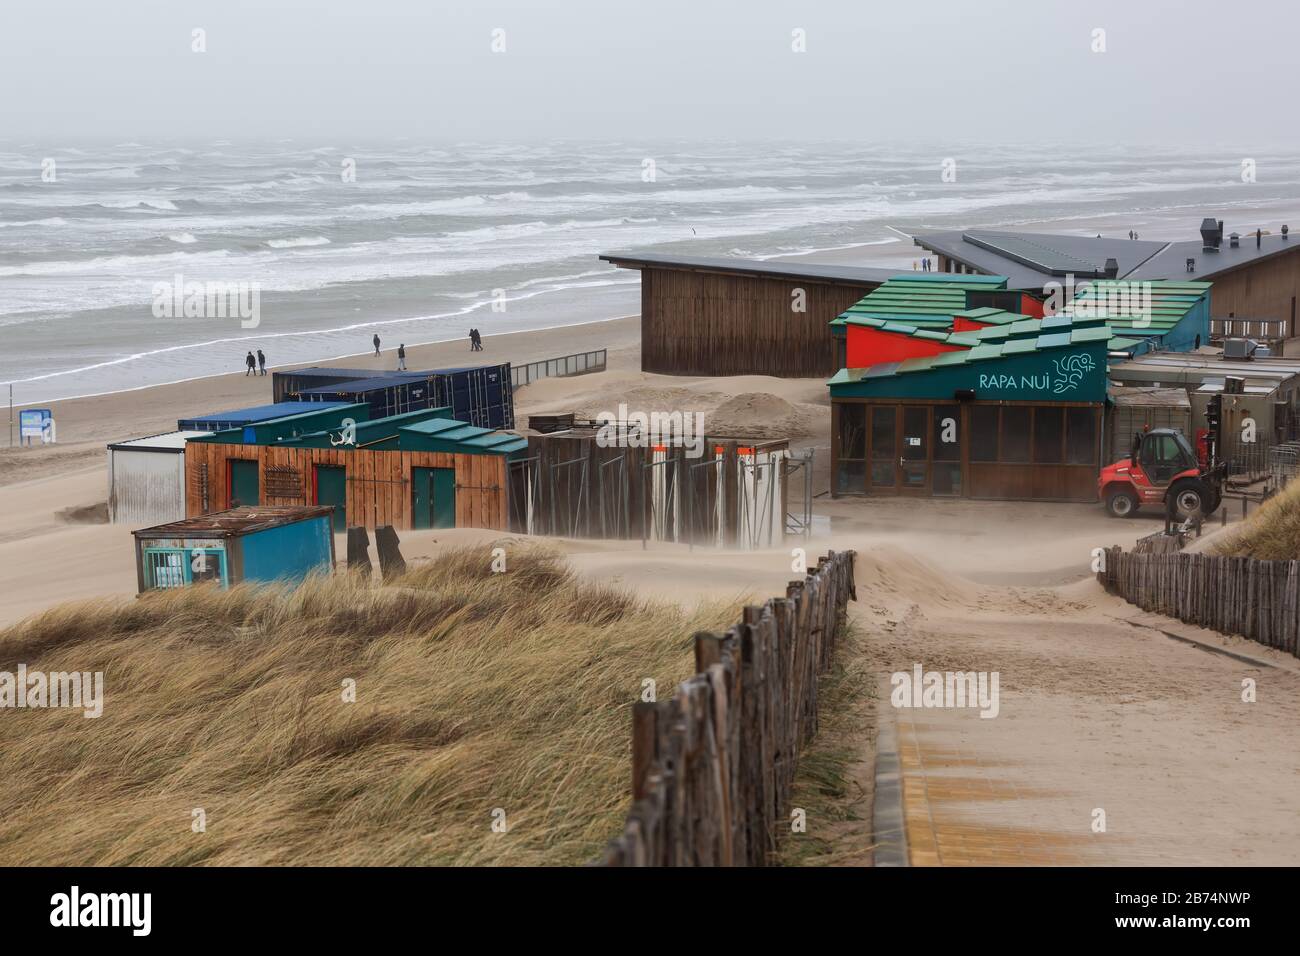 Bloemendaal aan Zee, Netherlands - February 23, 2020: beach restaurant on a stormy day in Bloemendaal with unidentified people. Bloemendaal aan Zee is Stock Photo